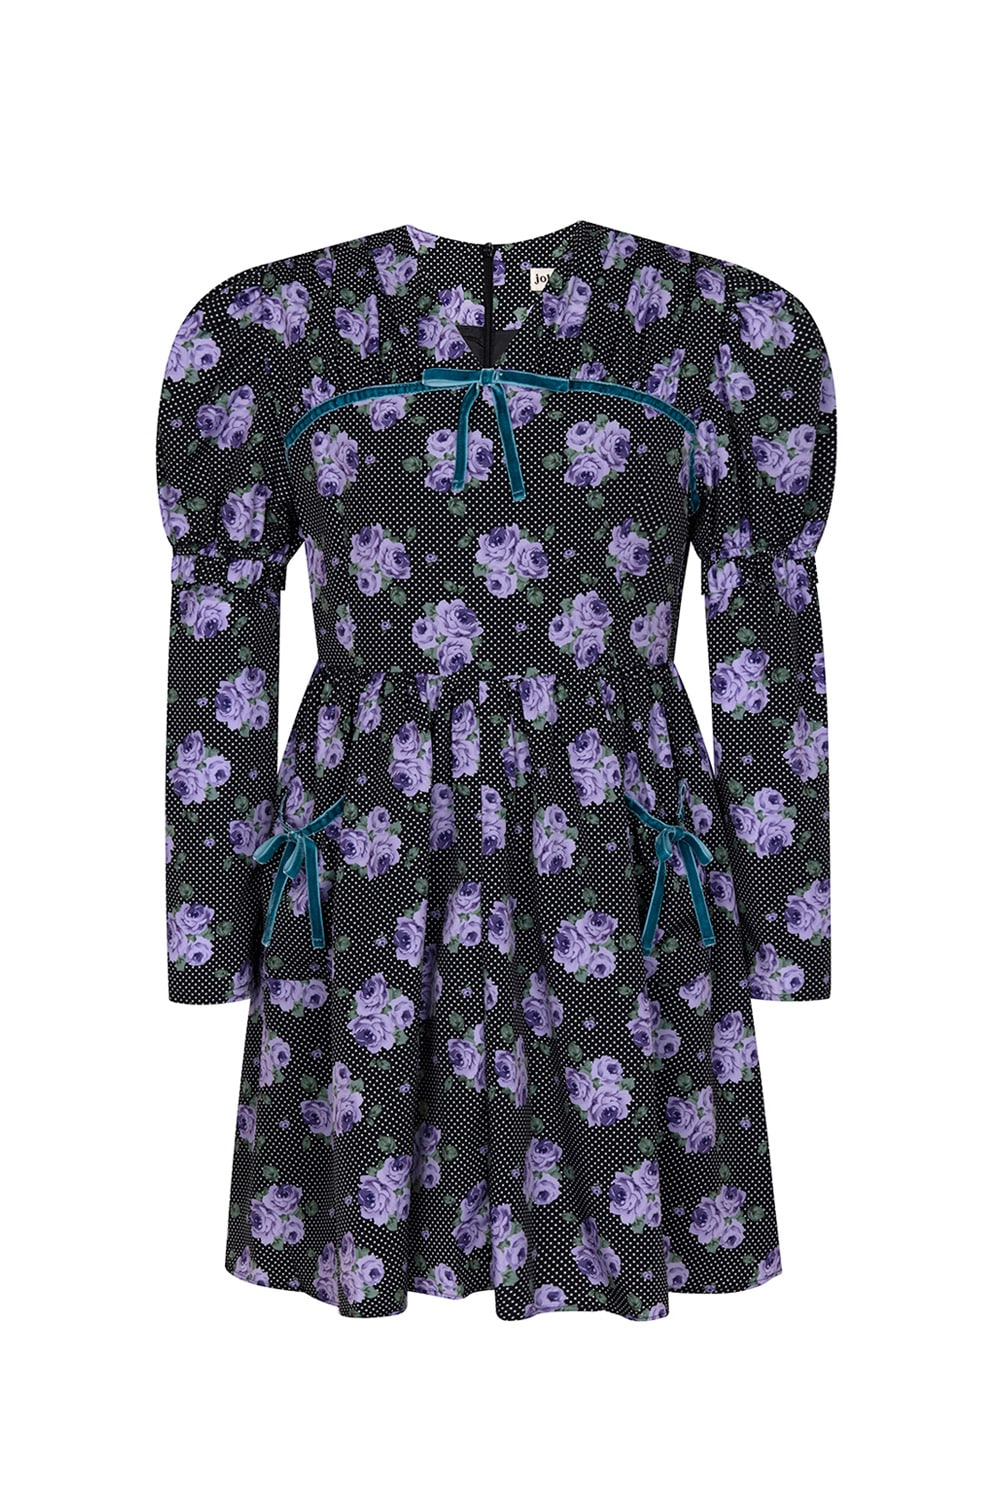 Juliet mini dress(violet)